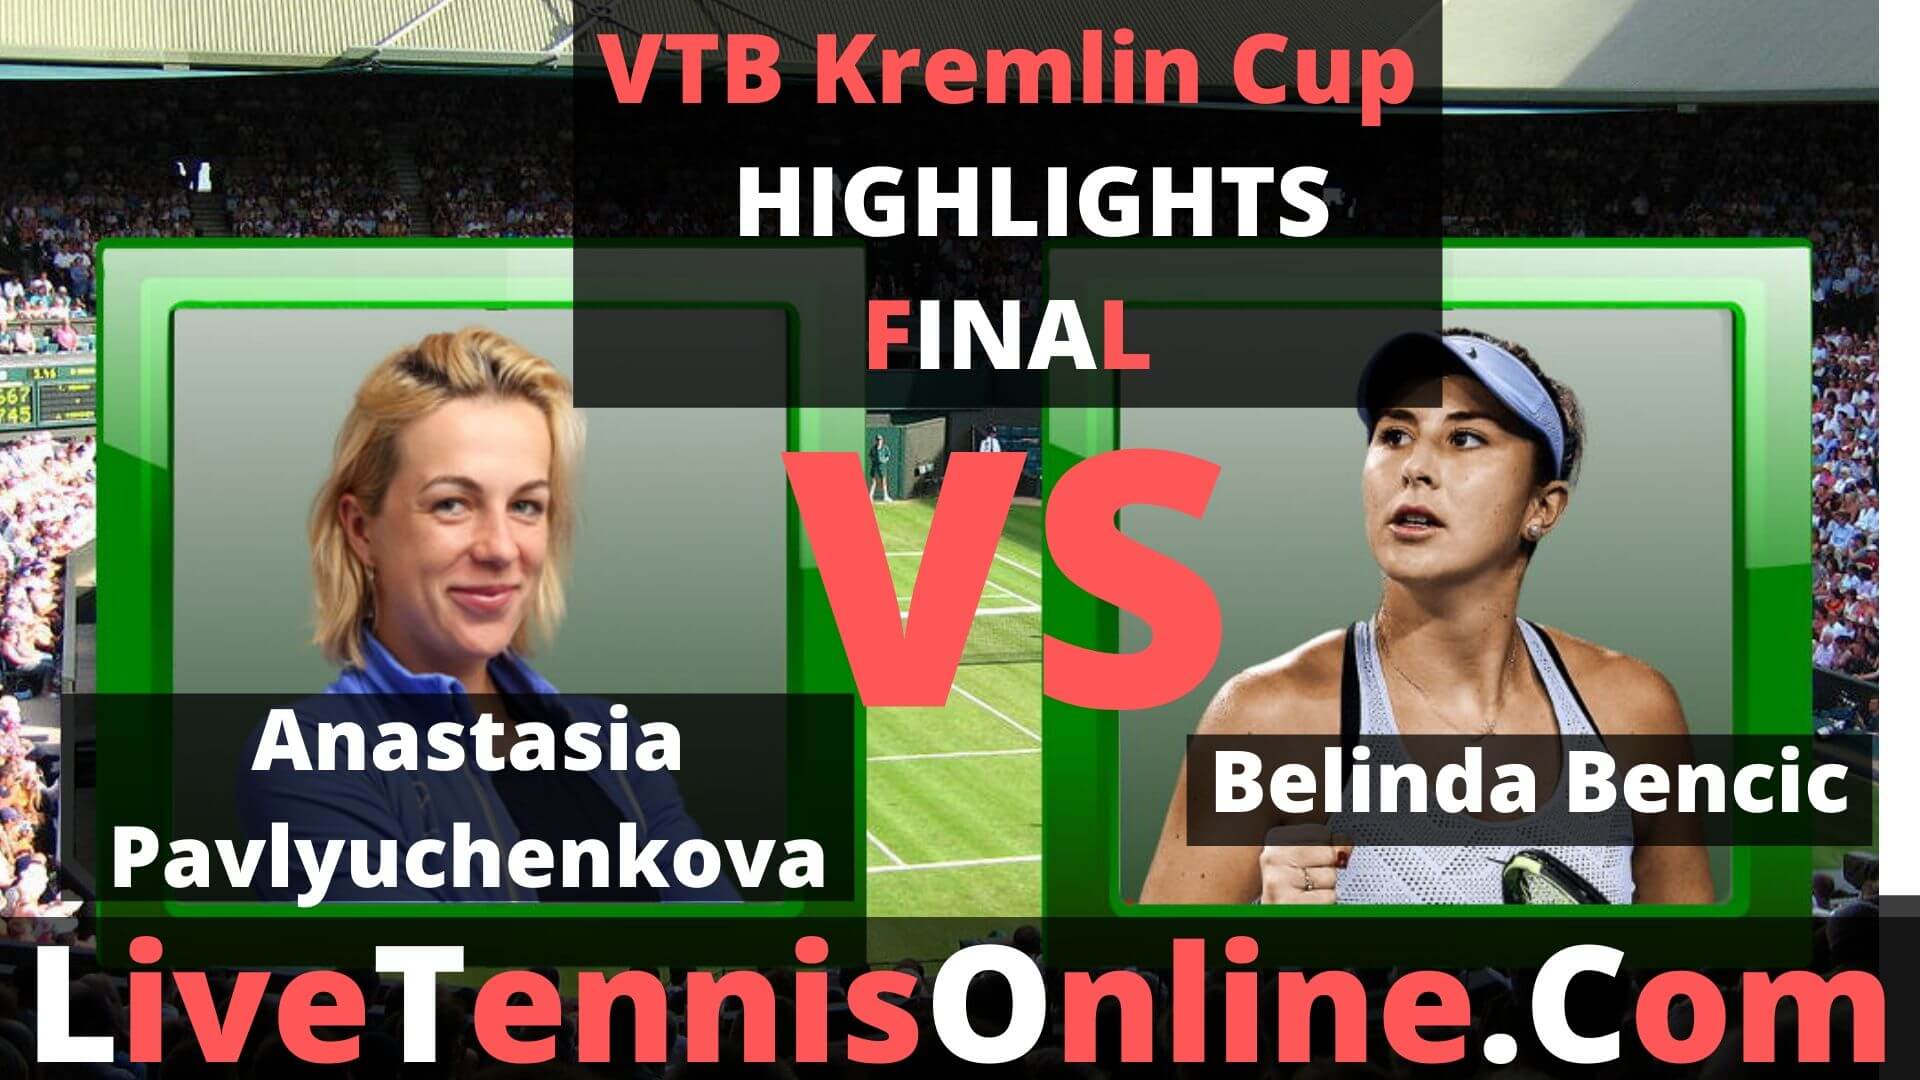 Anastasia Pavlyuchenkova Vs Belinda Bencic Highlights 2019 VTB Kremlin Cup Final